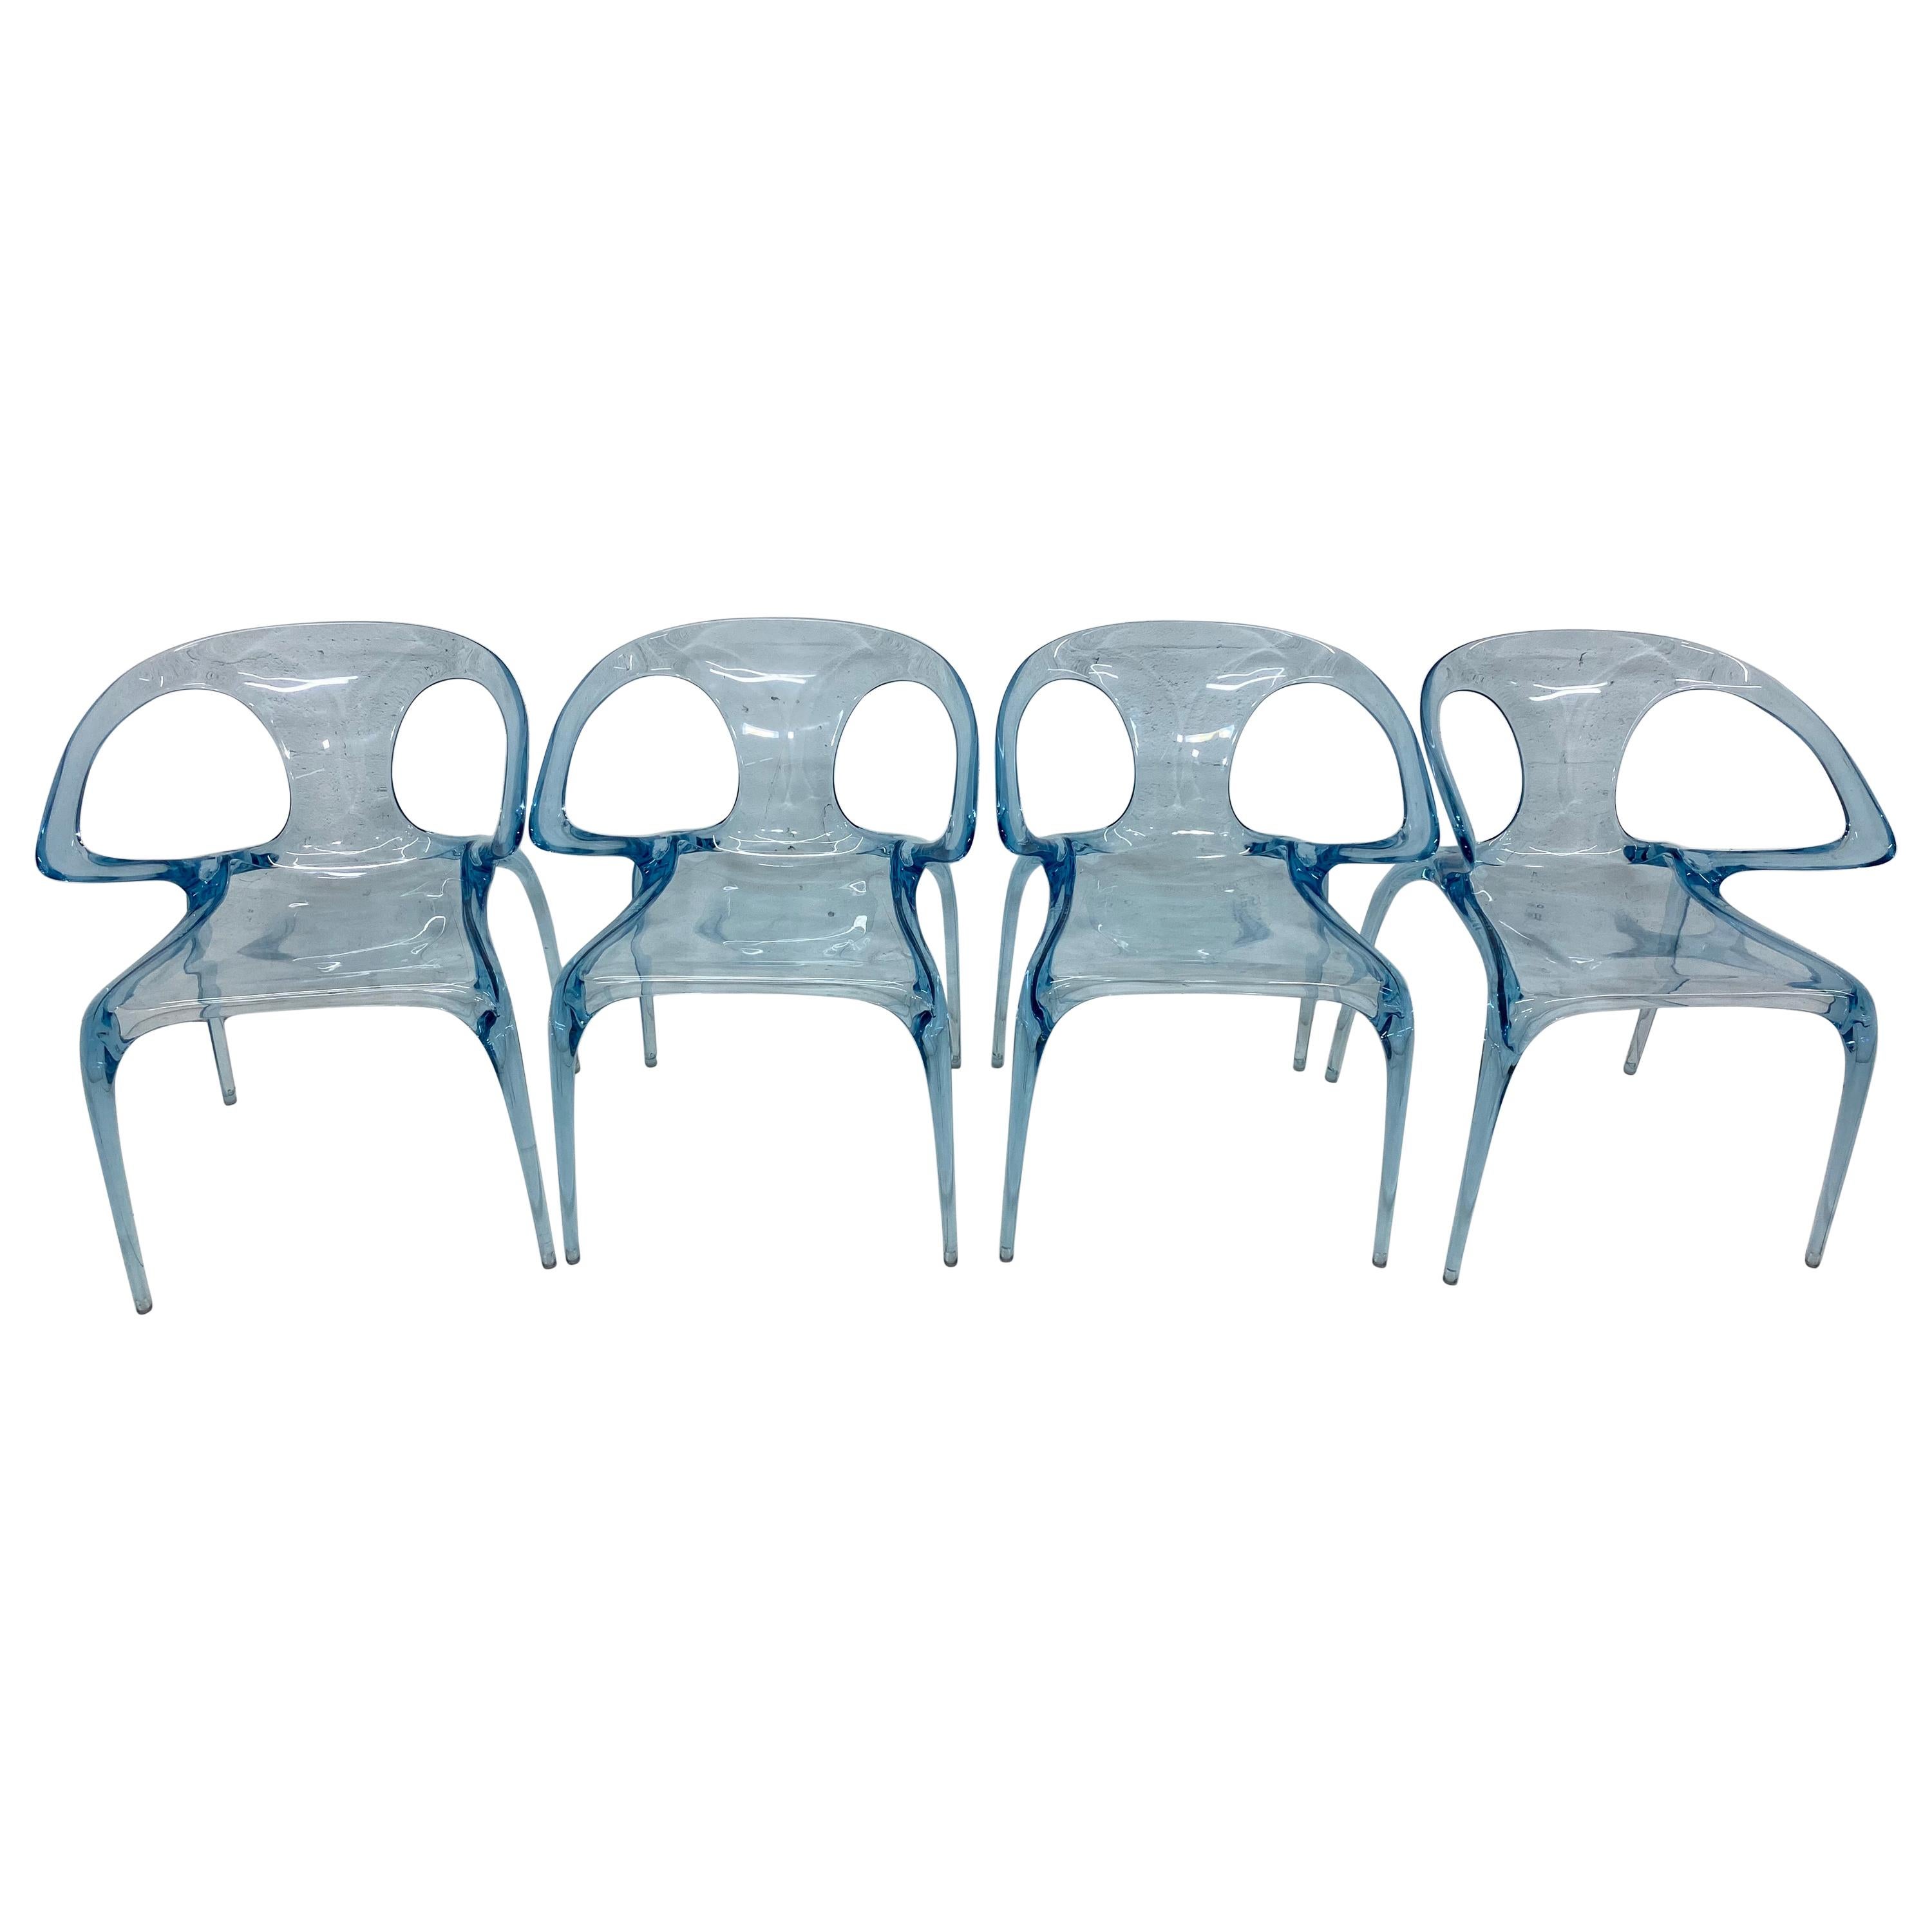 Song Wen Zhong Blue "Ava Bridge" Dining Chairs for Roche Bobois